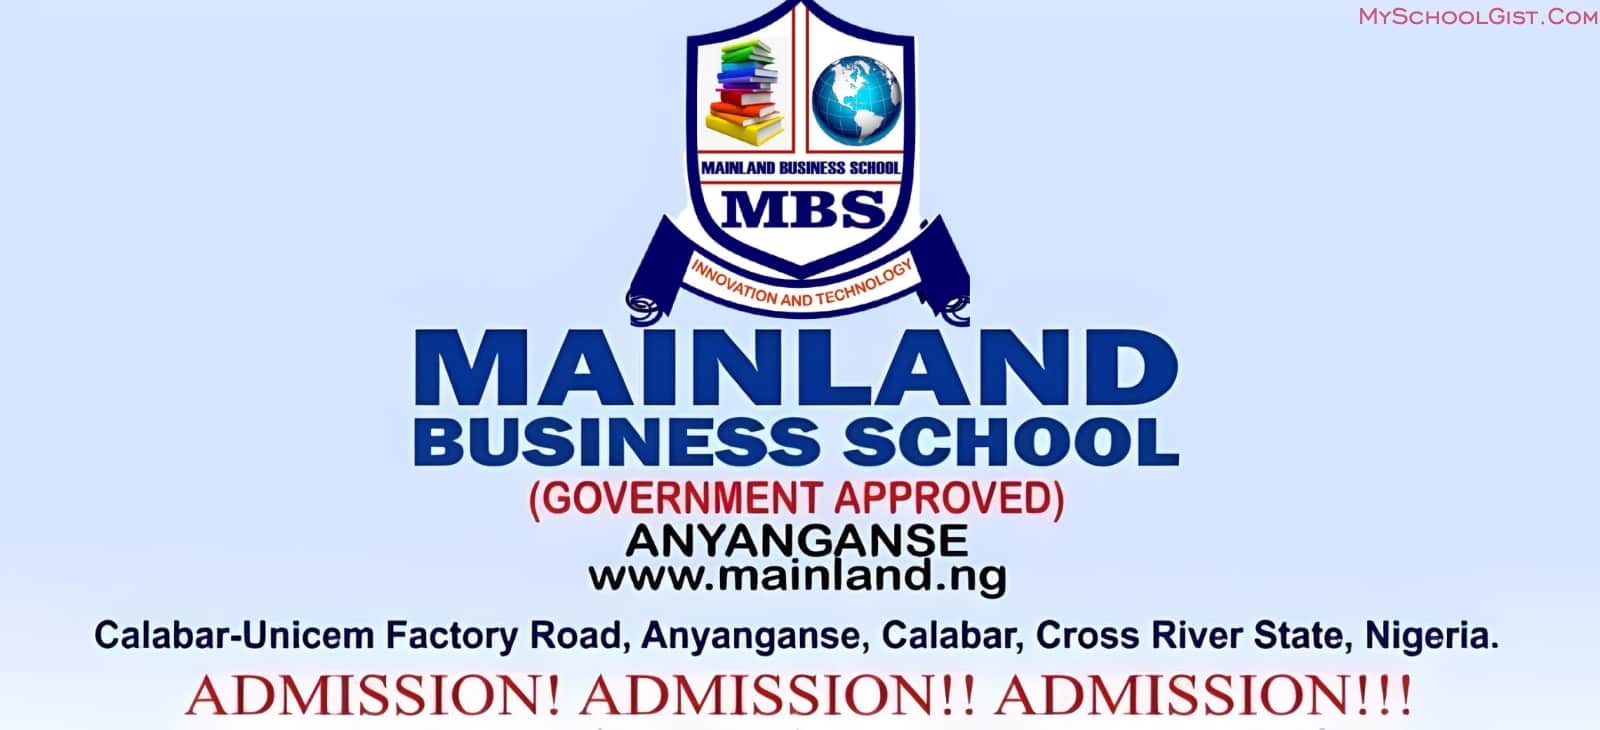 Mainland Business School's Degree Programmes Enrolment